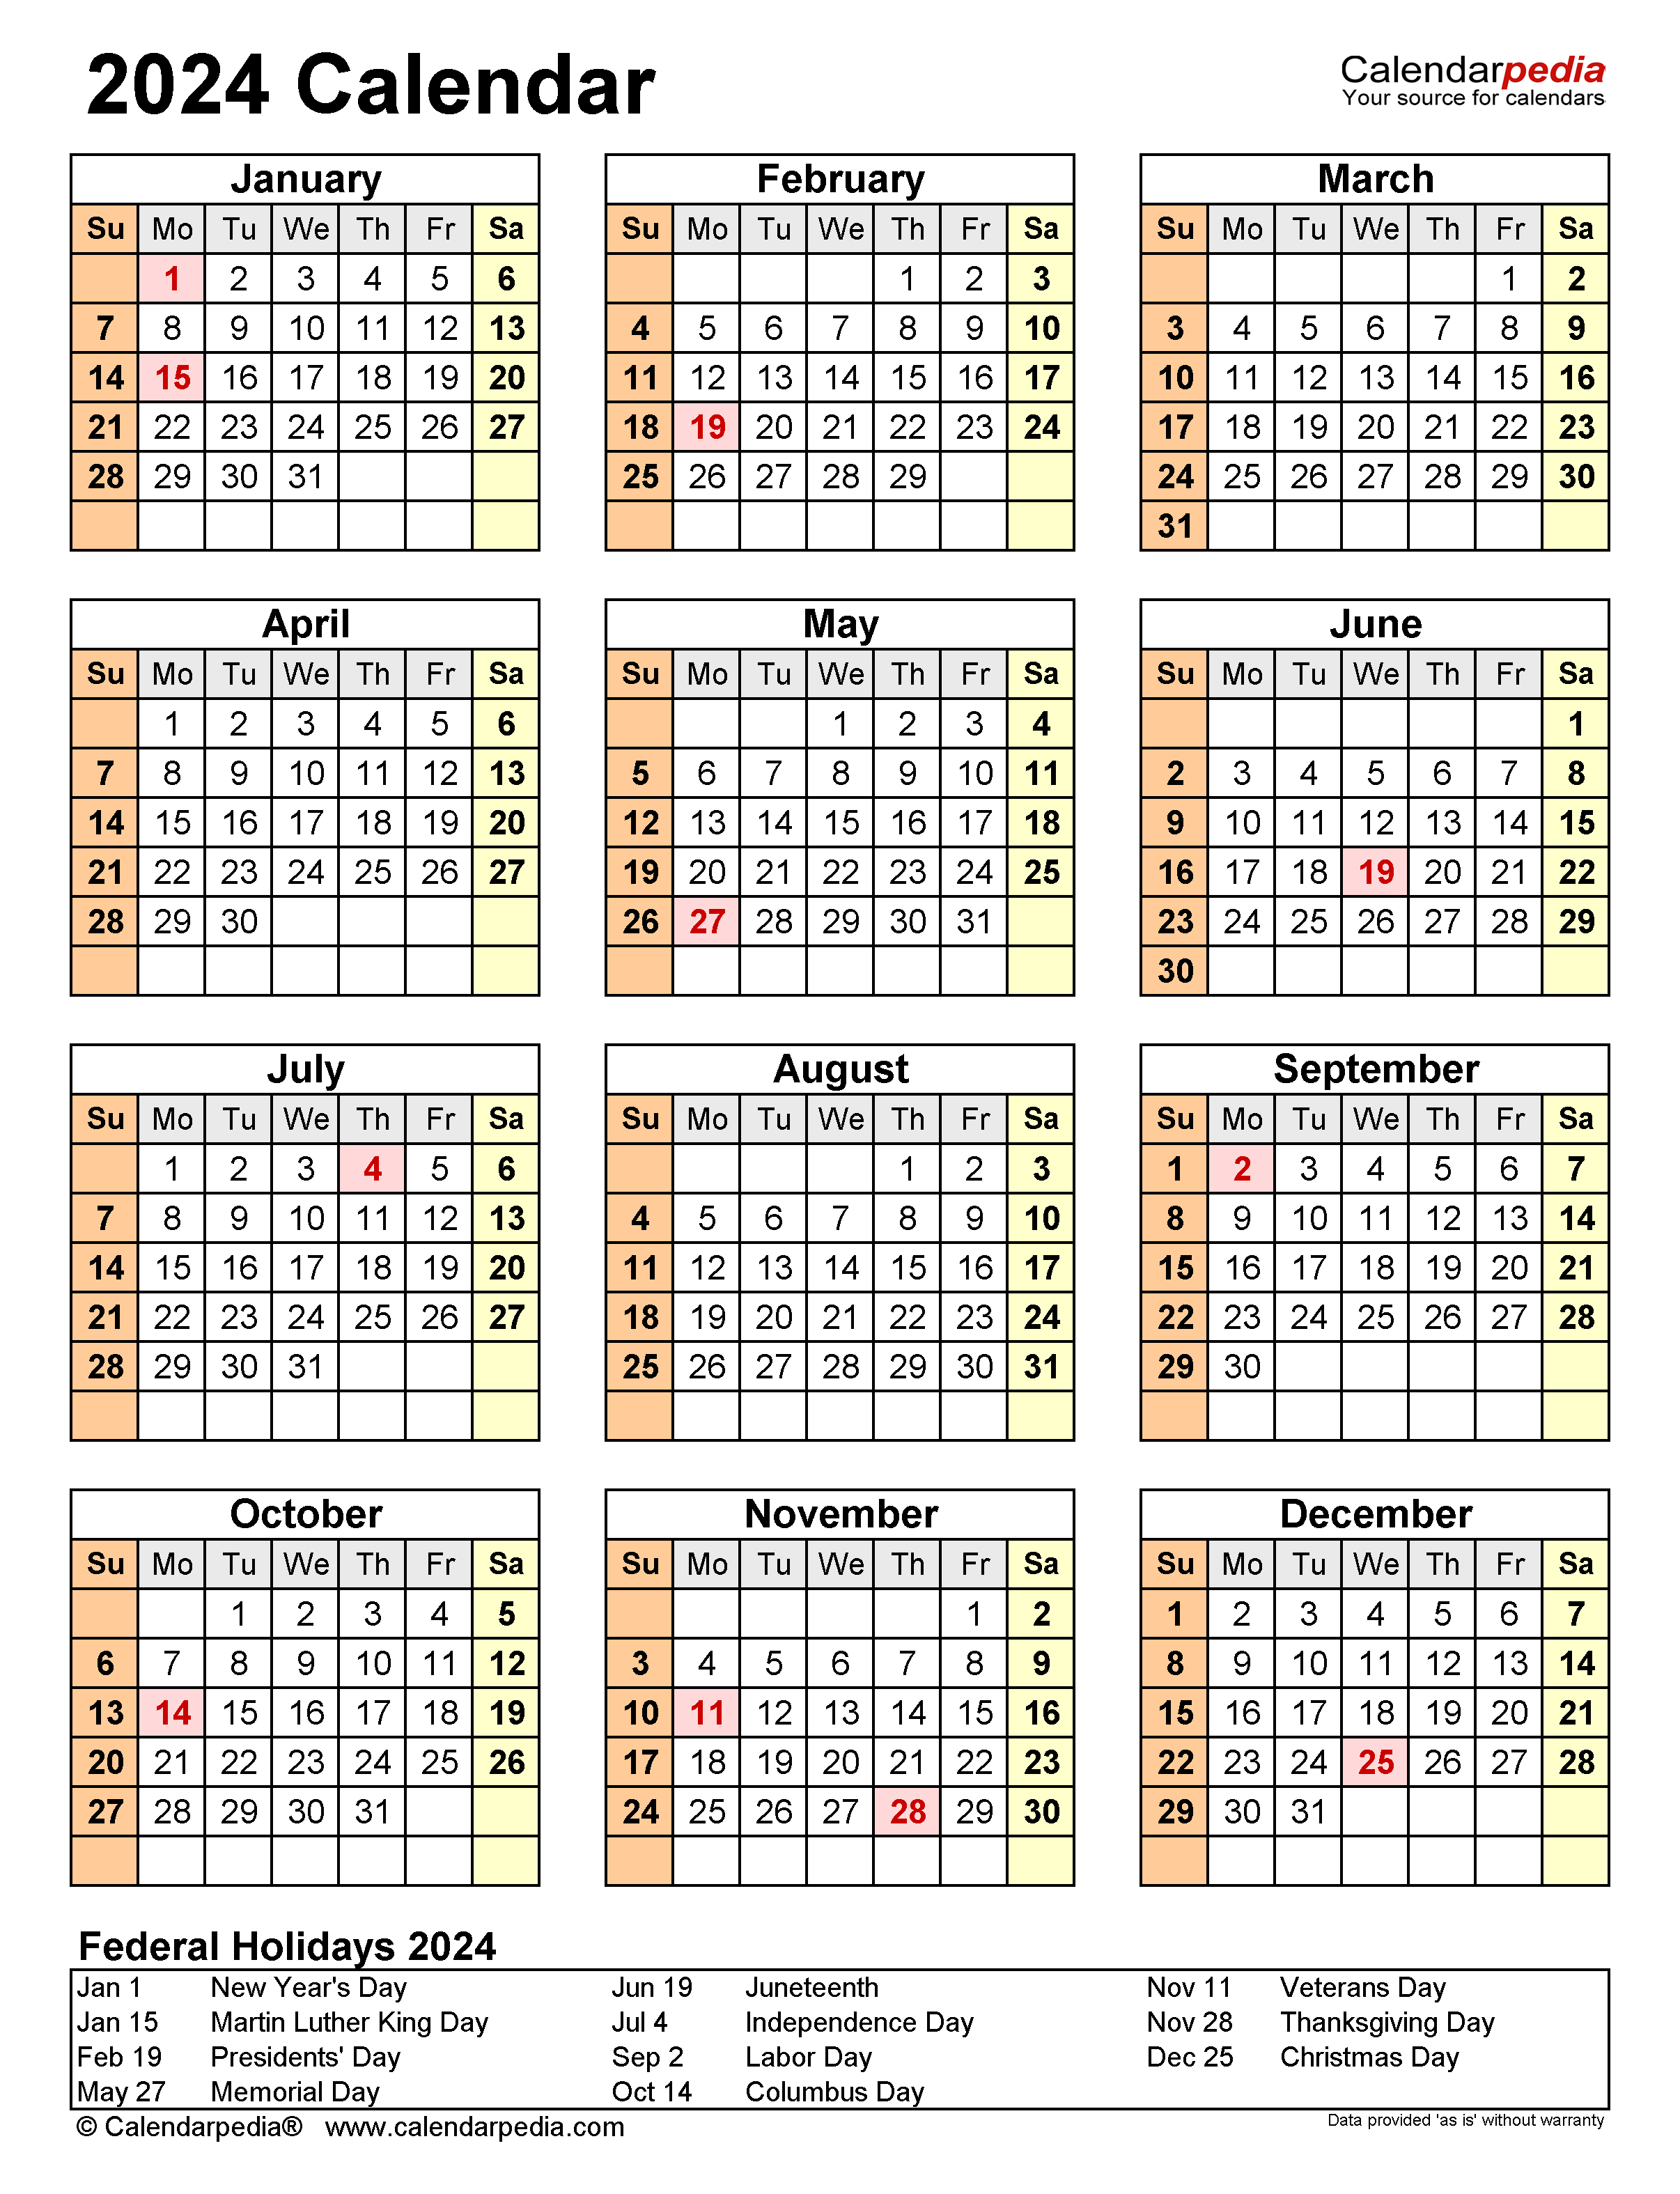 Free Printable 2024 Calendar With Holidays Crownflourmills | Free Printable 2024 Calendar With Holidays And Lines